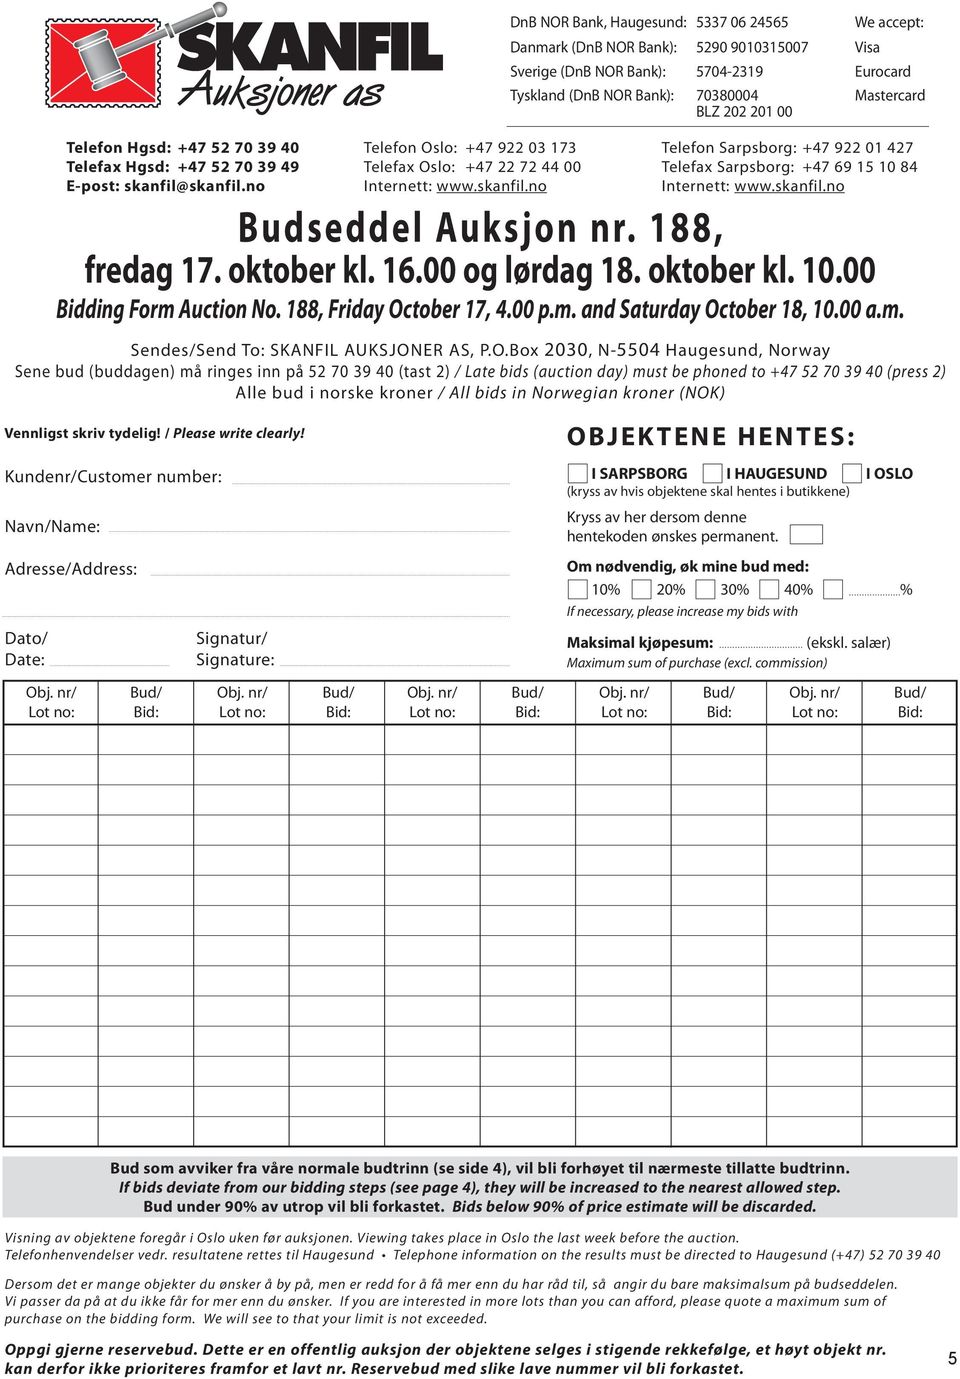 skanfil.no Budseddel Auksjon nr. 188, fredag 17. oktober kl. 16.00 og lørdag 18. oktober kl. 10.00 Bidding Form Auction No. 188, Friday October 17, 4.00 p.m. and Saturday October 18, 10.00 a.m. Sendes/Send To: SKANFIL Auksjoner AS, P.